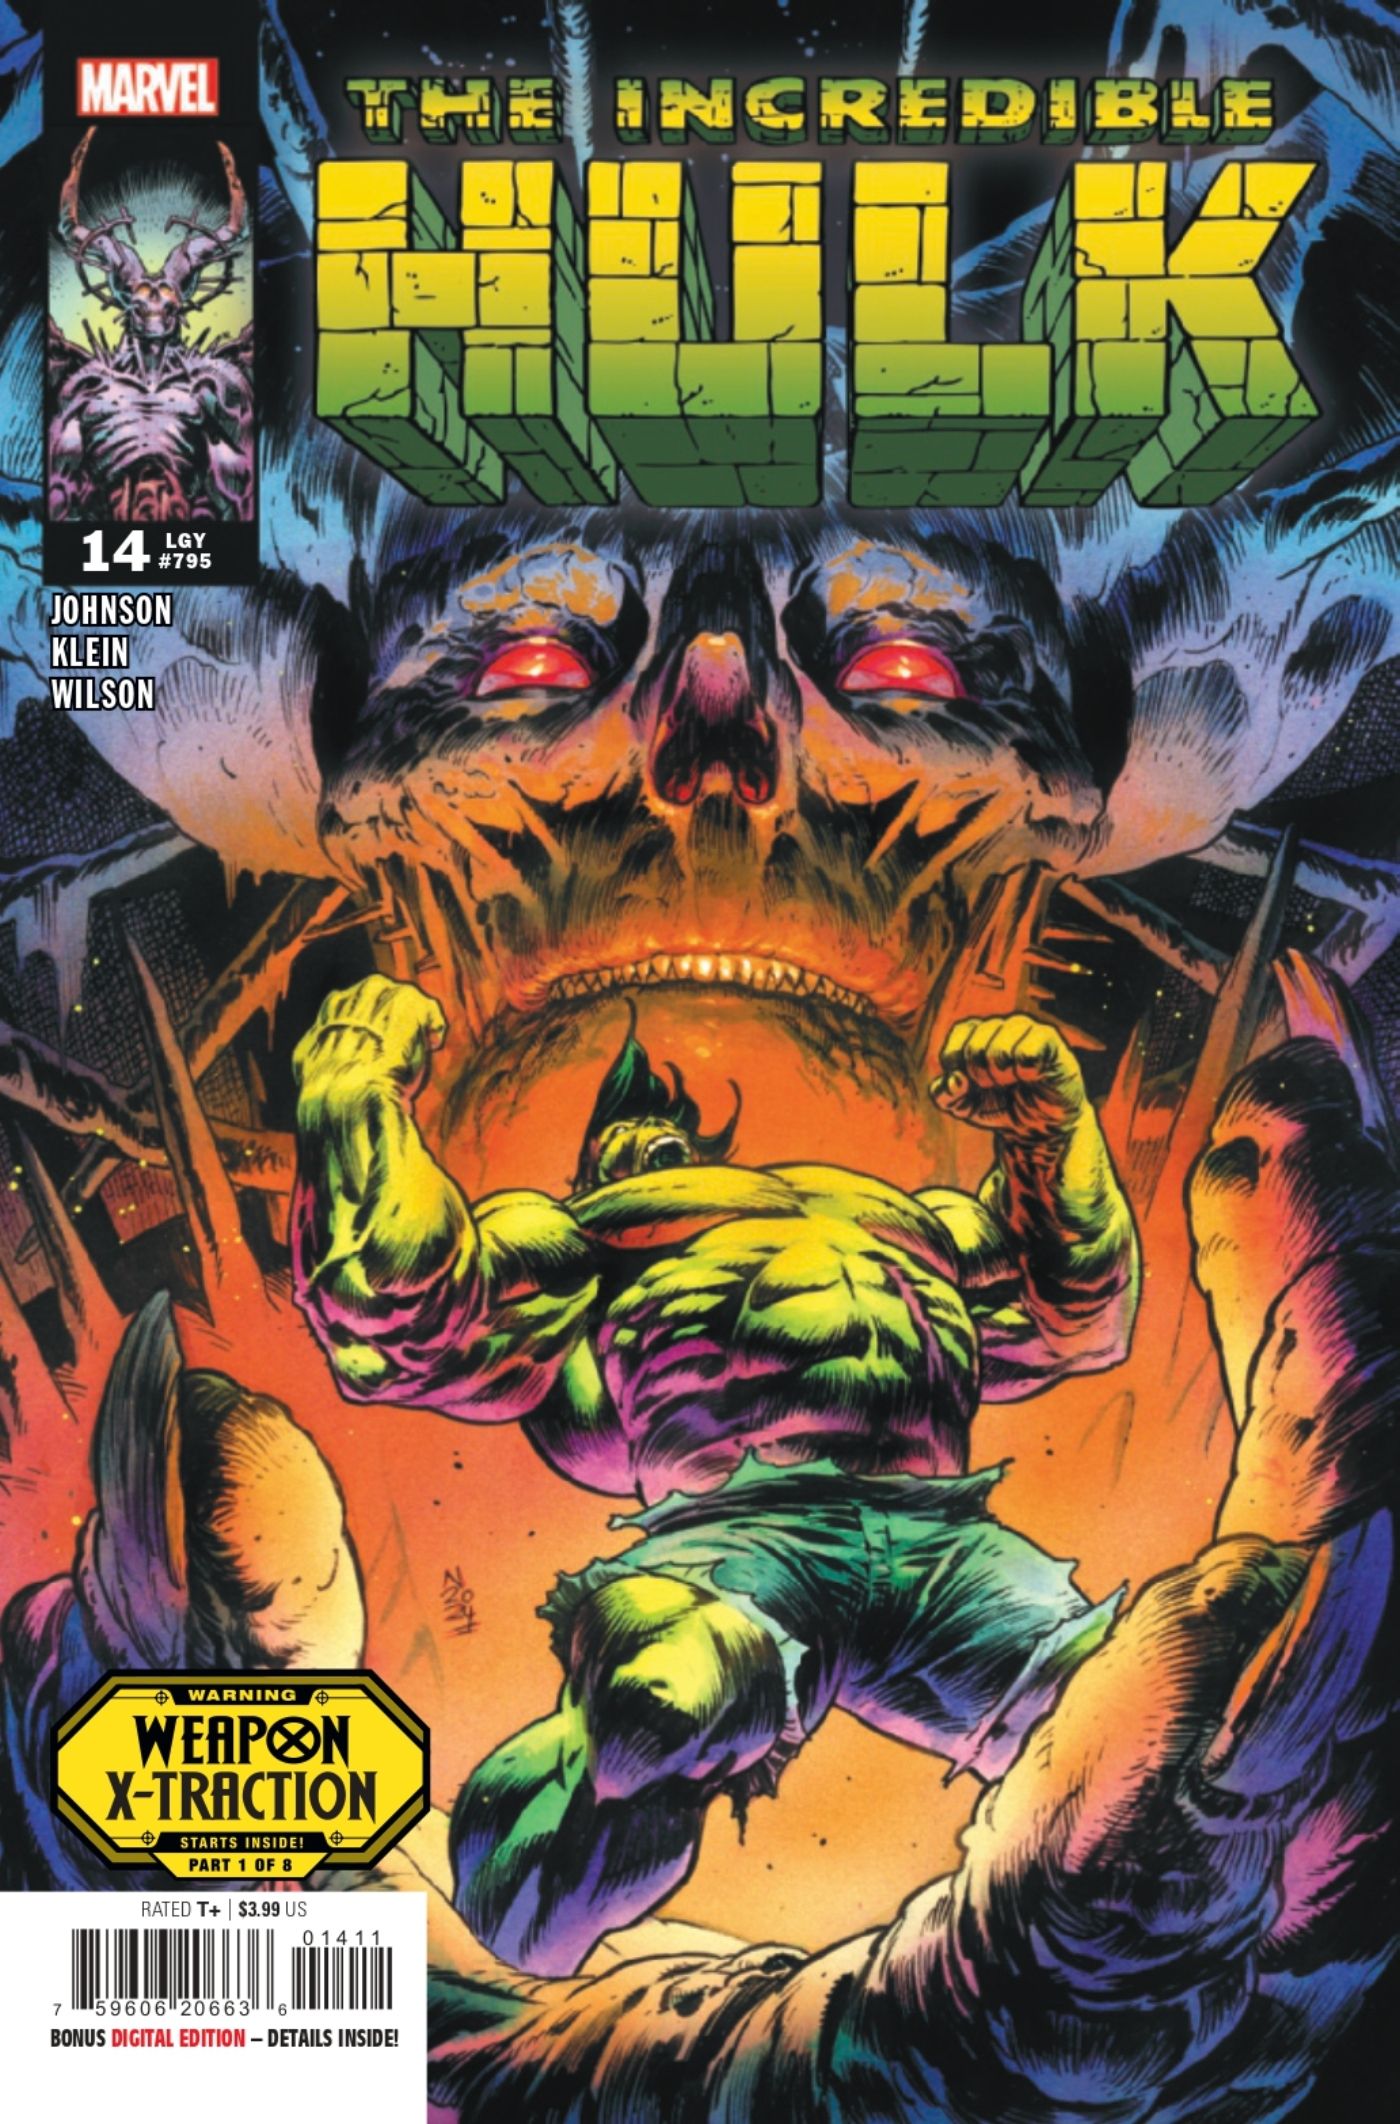 Capa de The Incredible Hulk #14 mostrando Hulk na palma de um gigante esquelético.